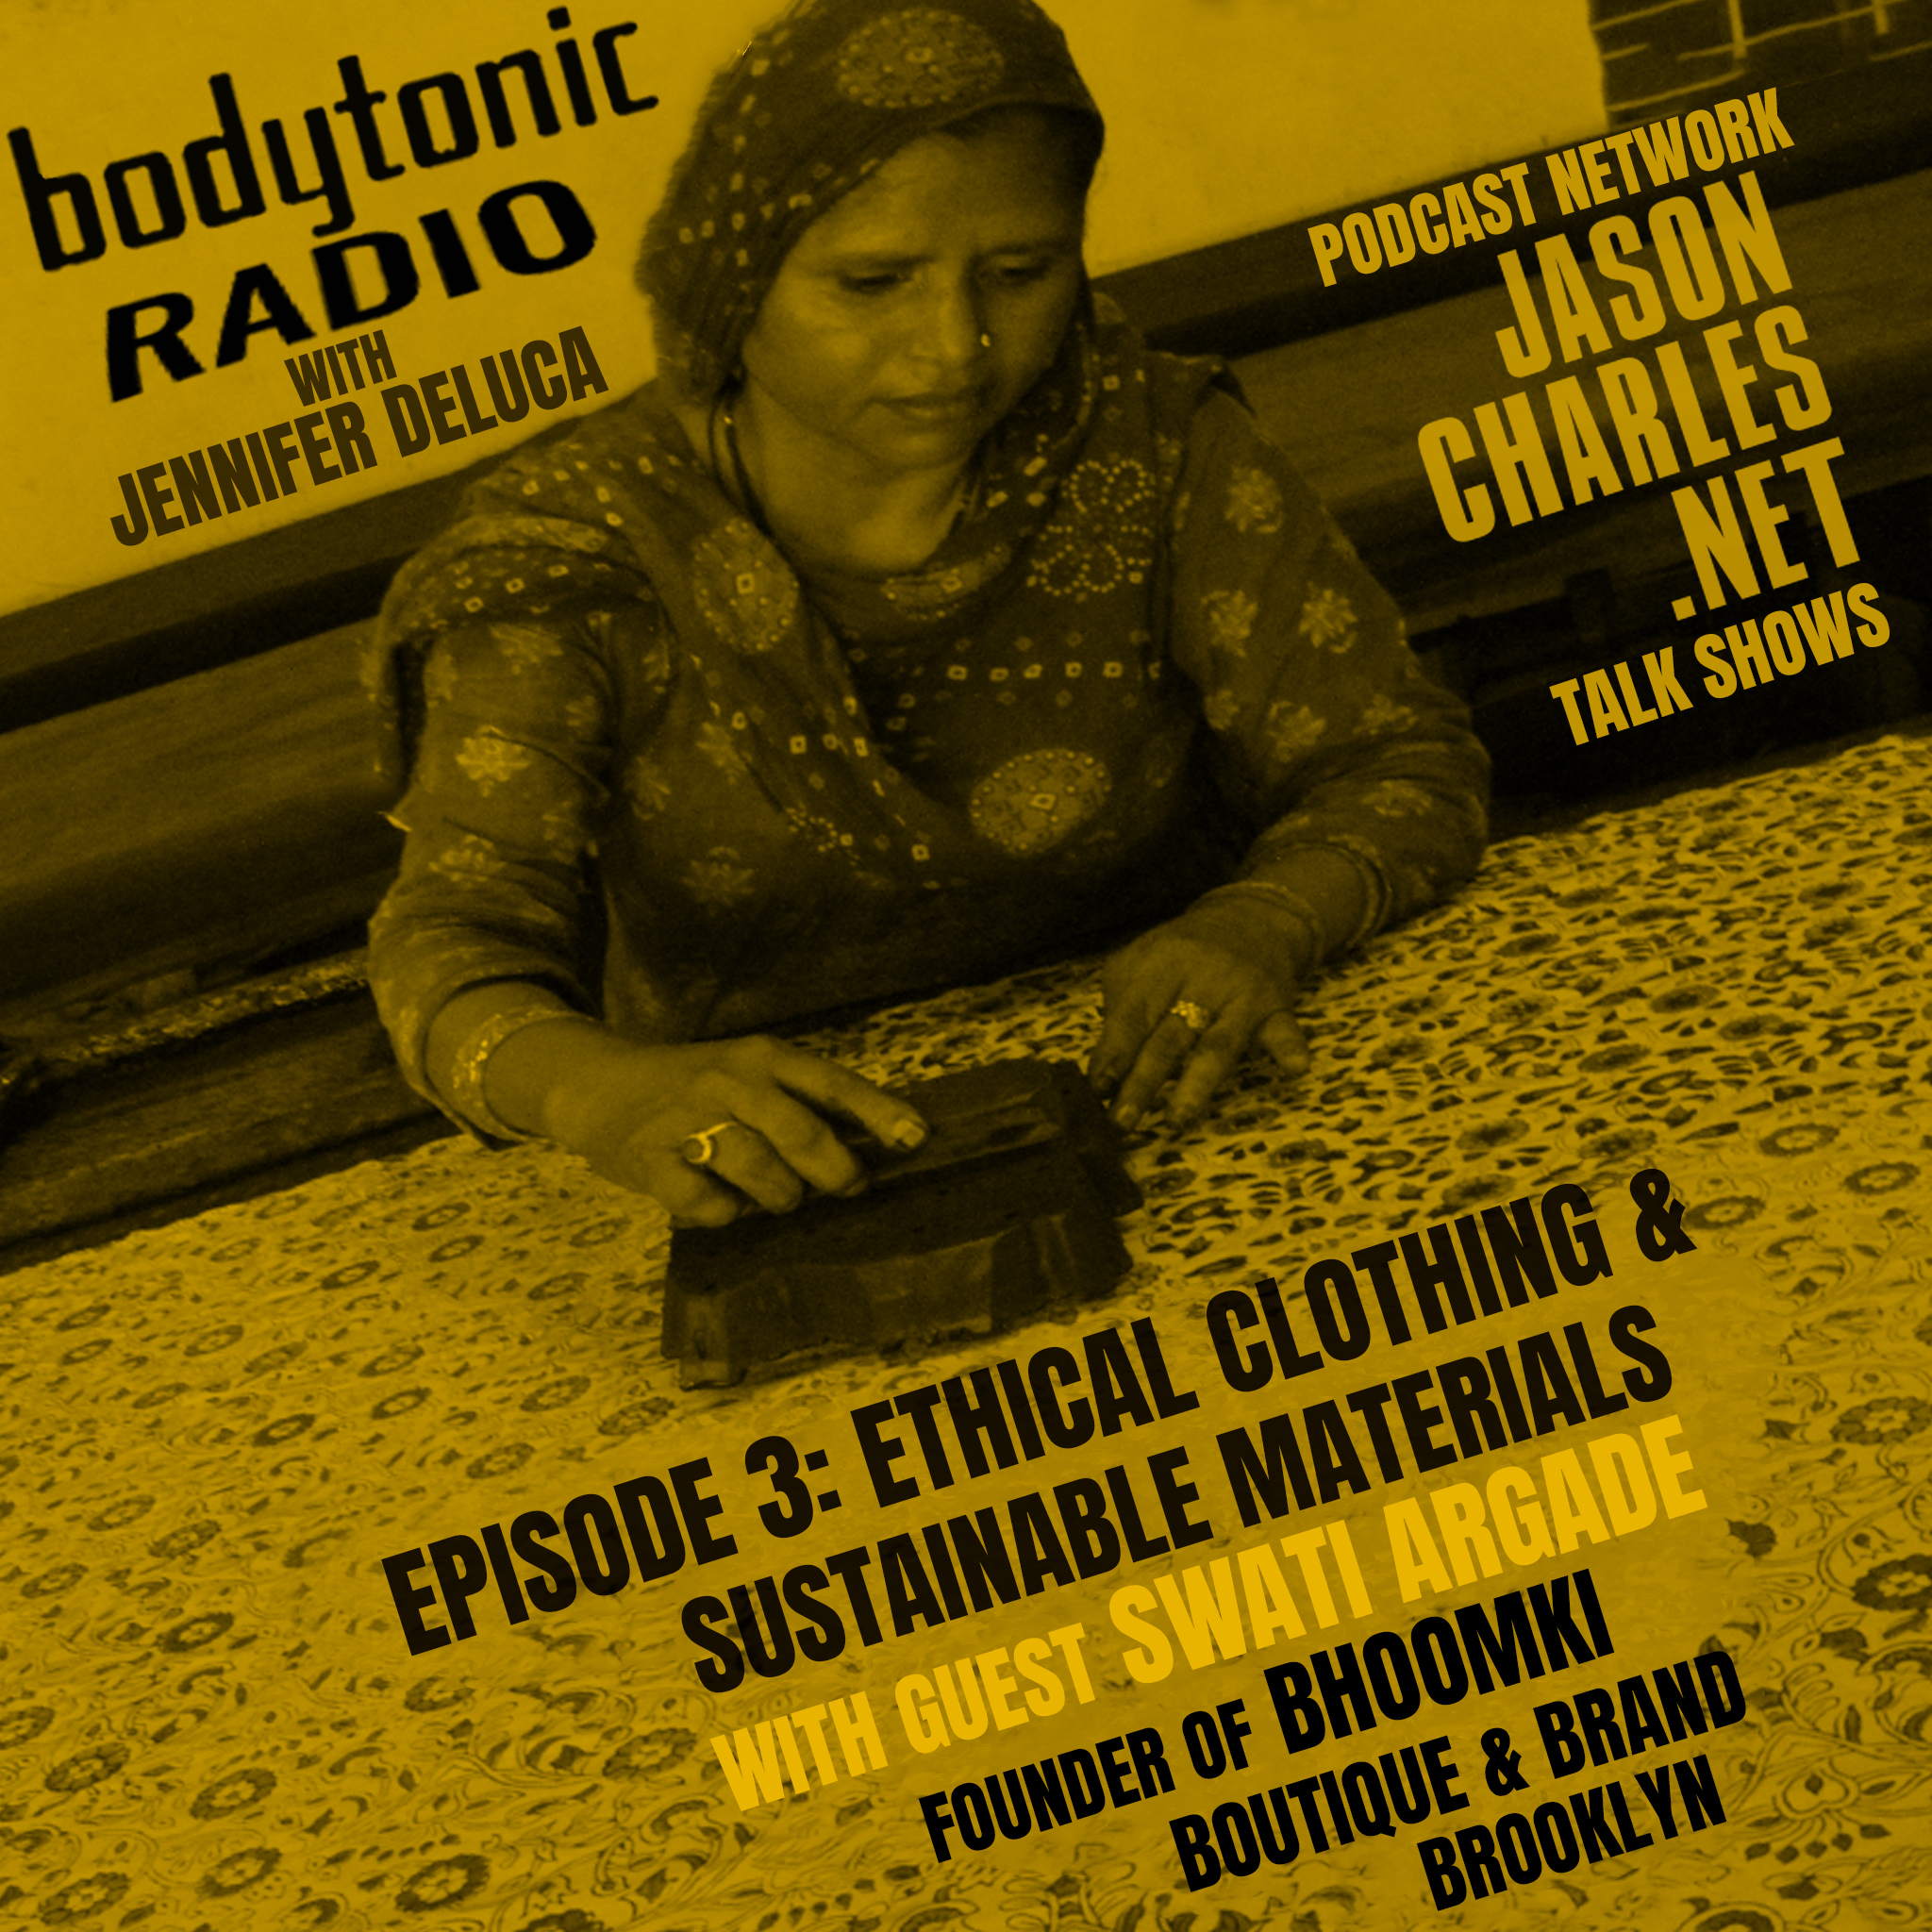 BODYTONIC RADIO Episode 3 Guest SWATI ARGADE on Ethical Clothing